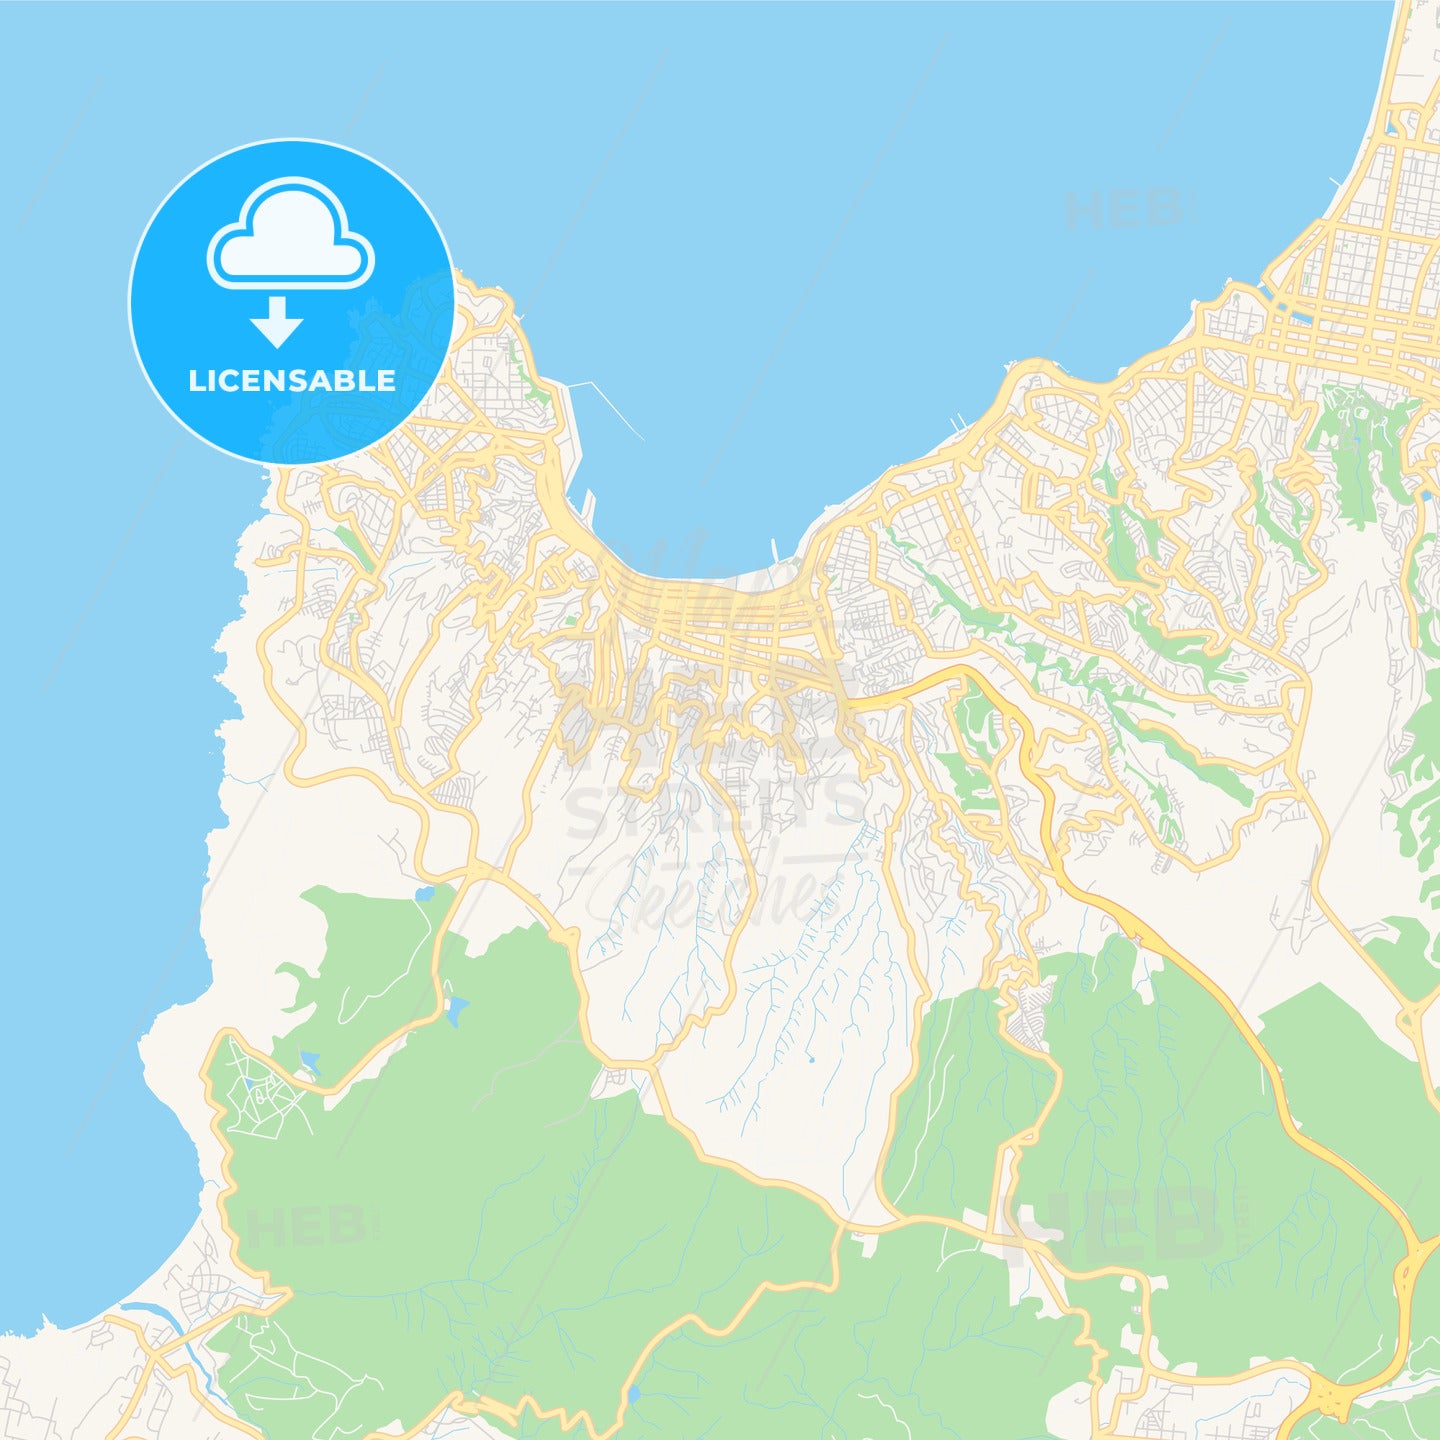 Printable street map of Valparaiso, Chile